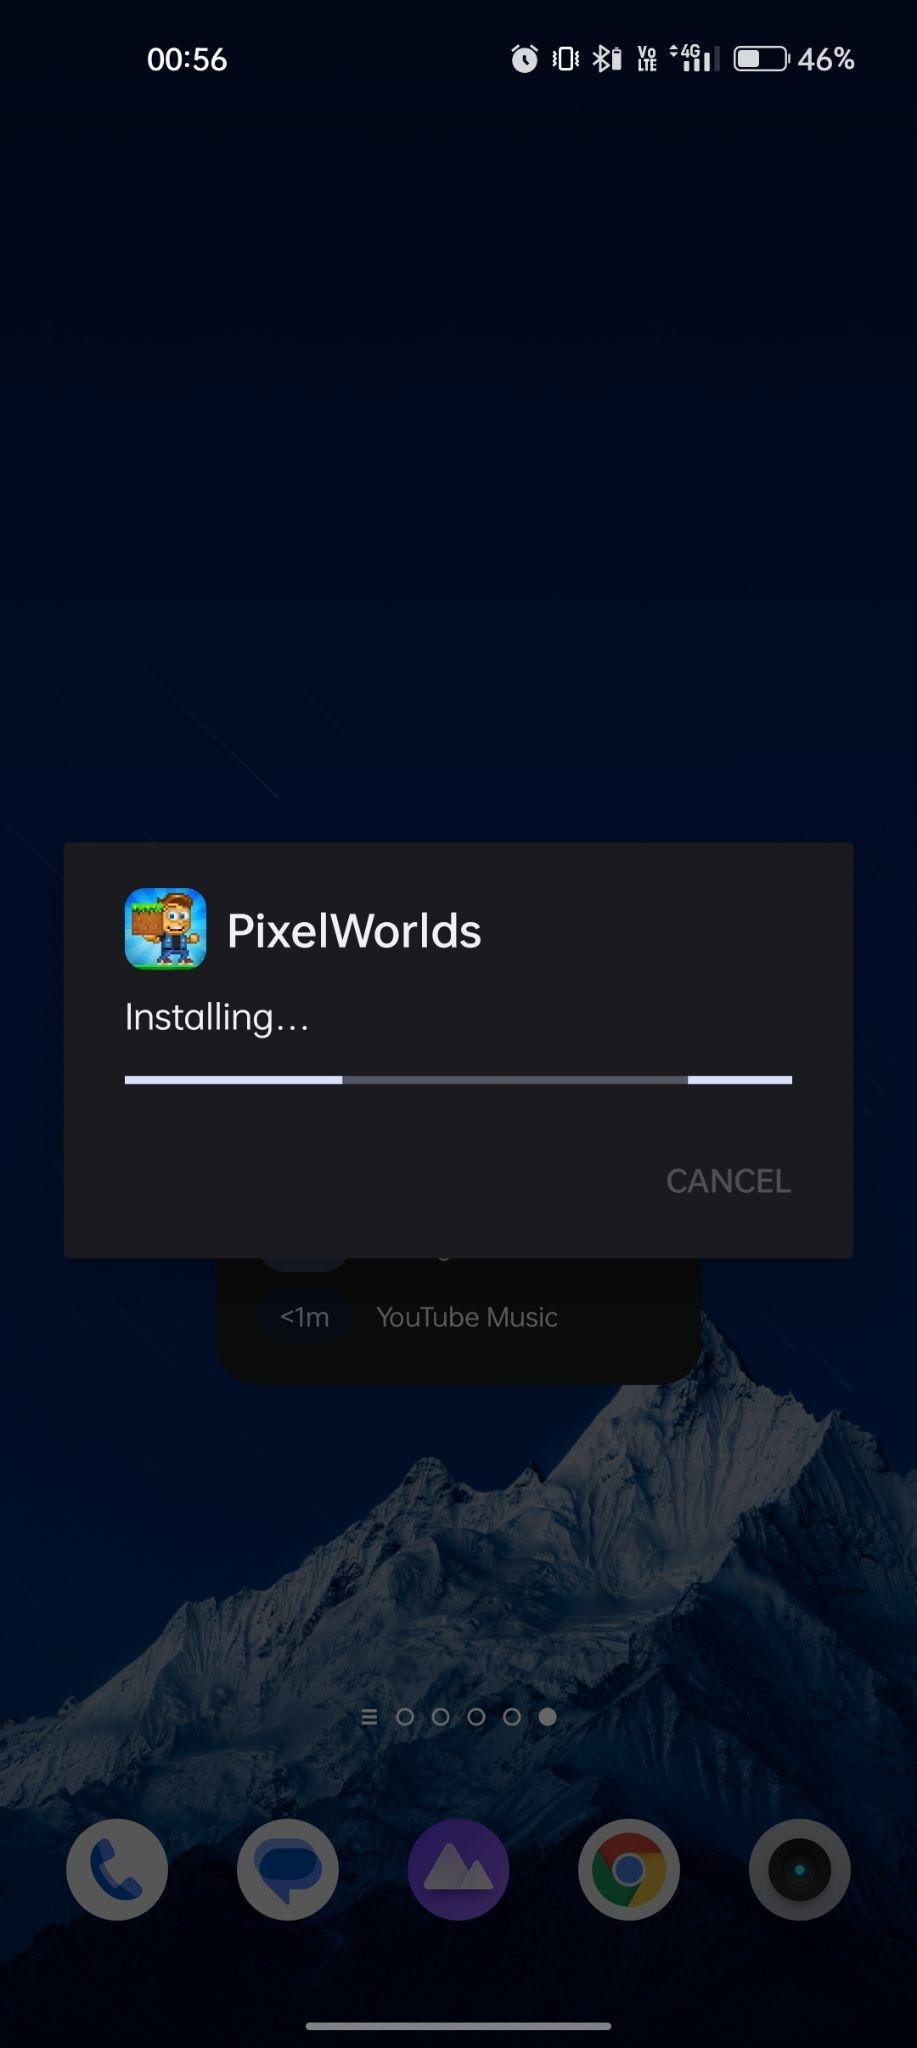 pixel worlds apk installing